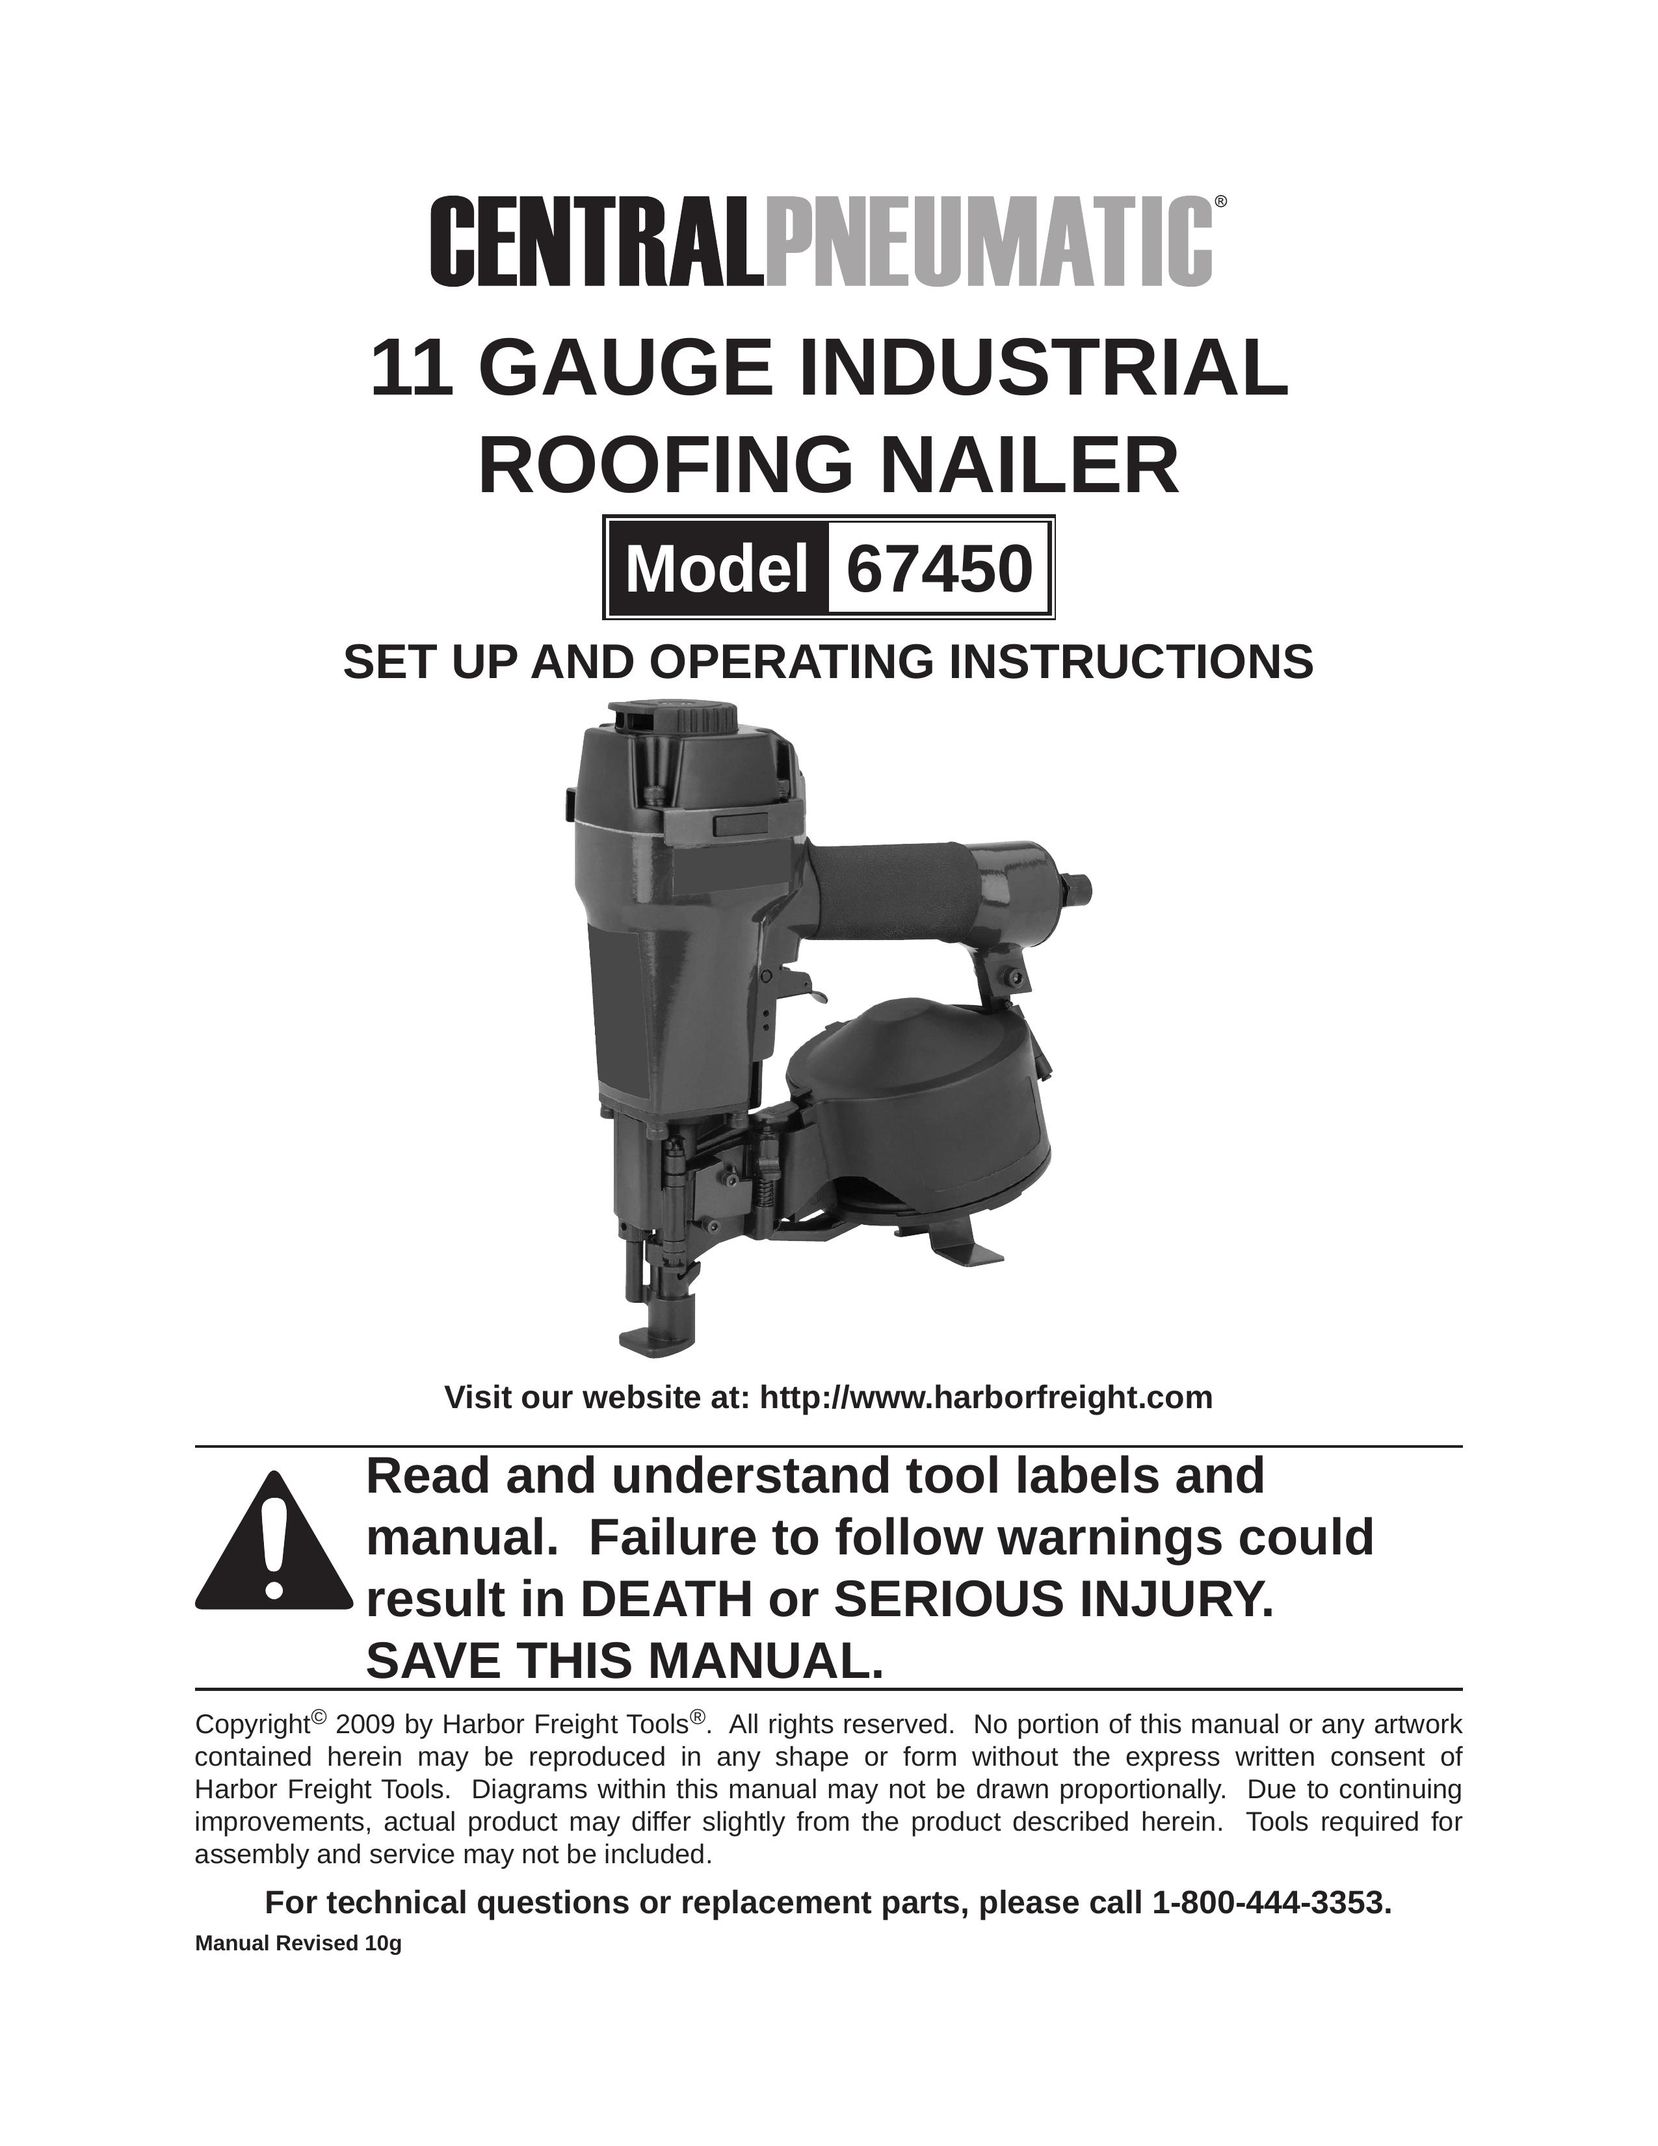 Harbor Freight Tools 67450 Nail Gun User Manual